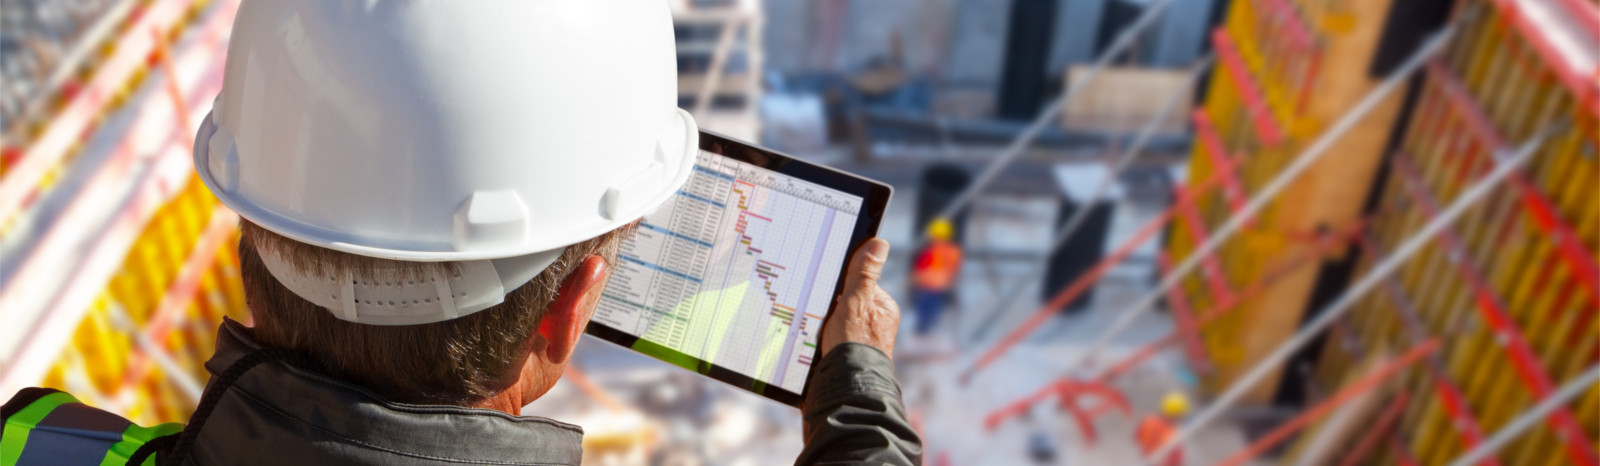 SAP CX Construction Suite für Baubranche Header